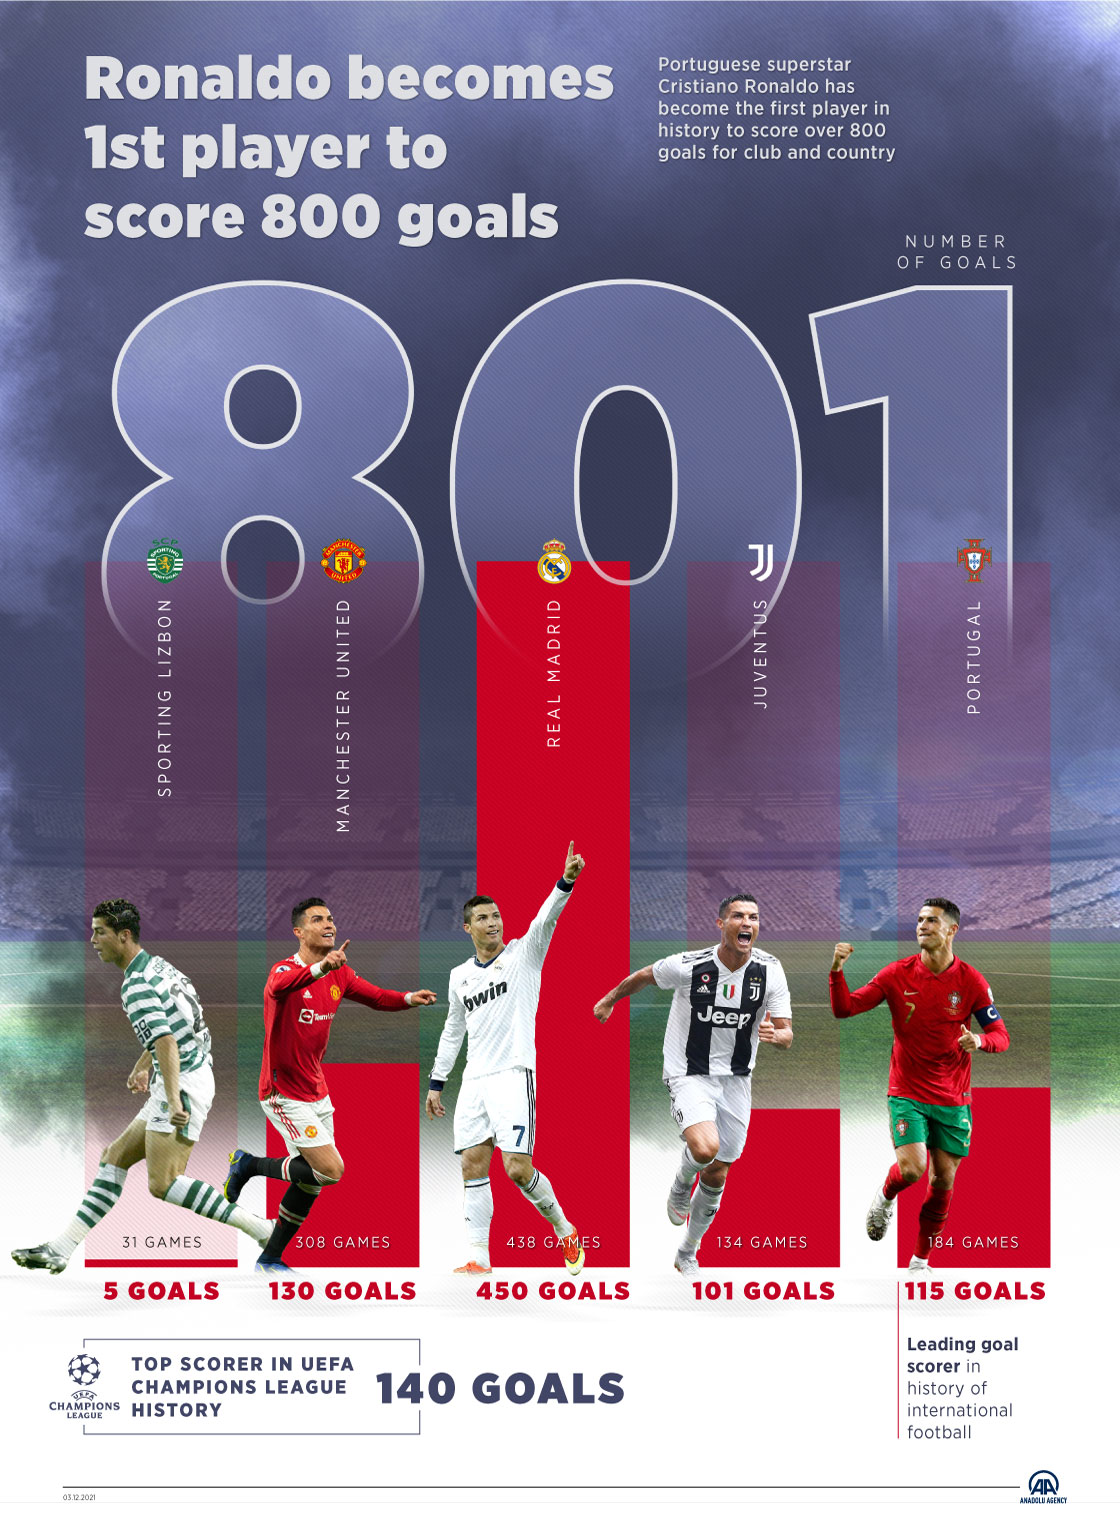 Ronaldo becomes 1st player to score 800 goals